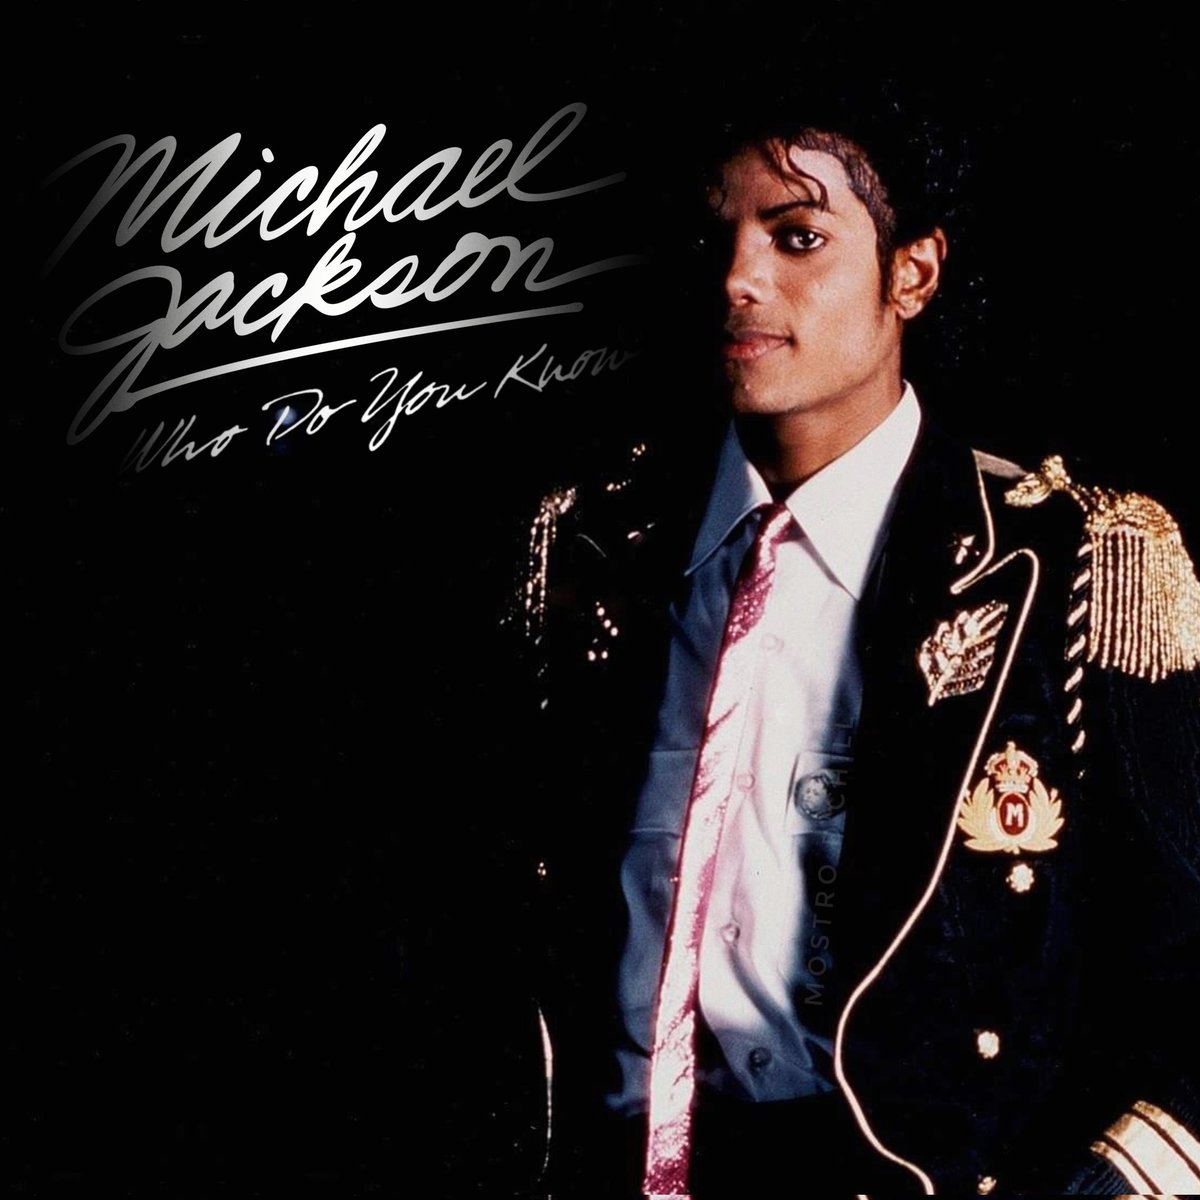 ✨️👤MICHAEL JACKSON'S THRILLER 40 DOUBLE ALBUM LAUNCHES TOMORROW!👤✨️ #WhoDoYouKnow #Thriller40 #MichaelJackson